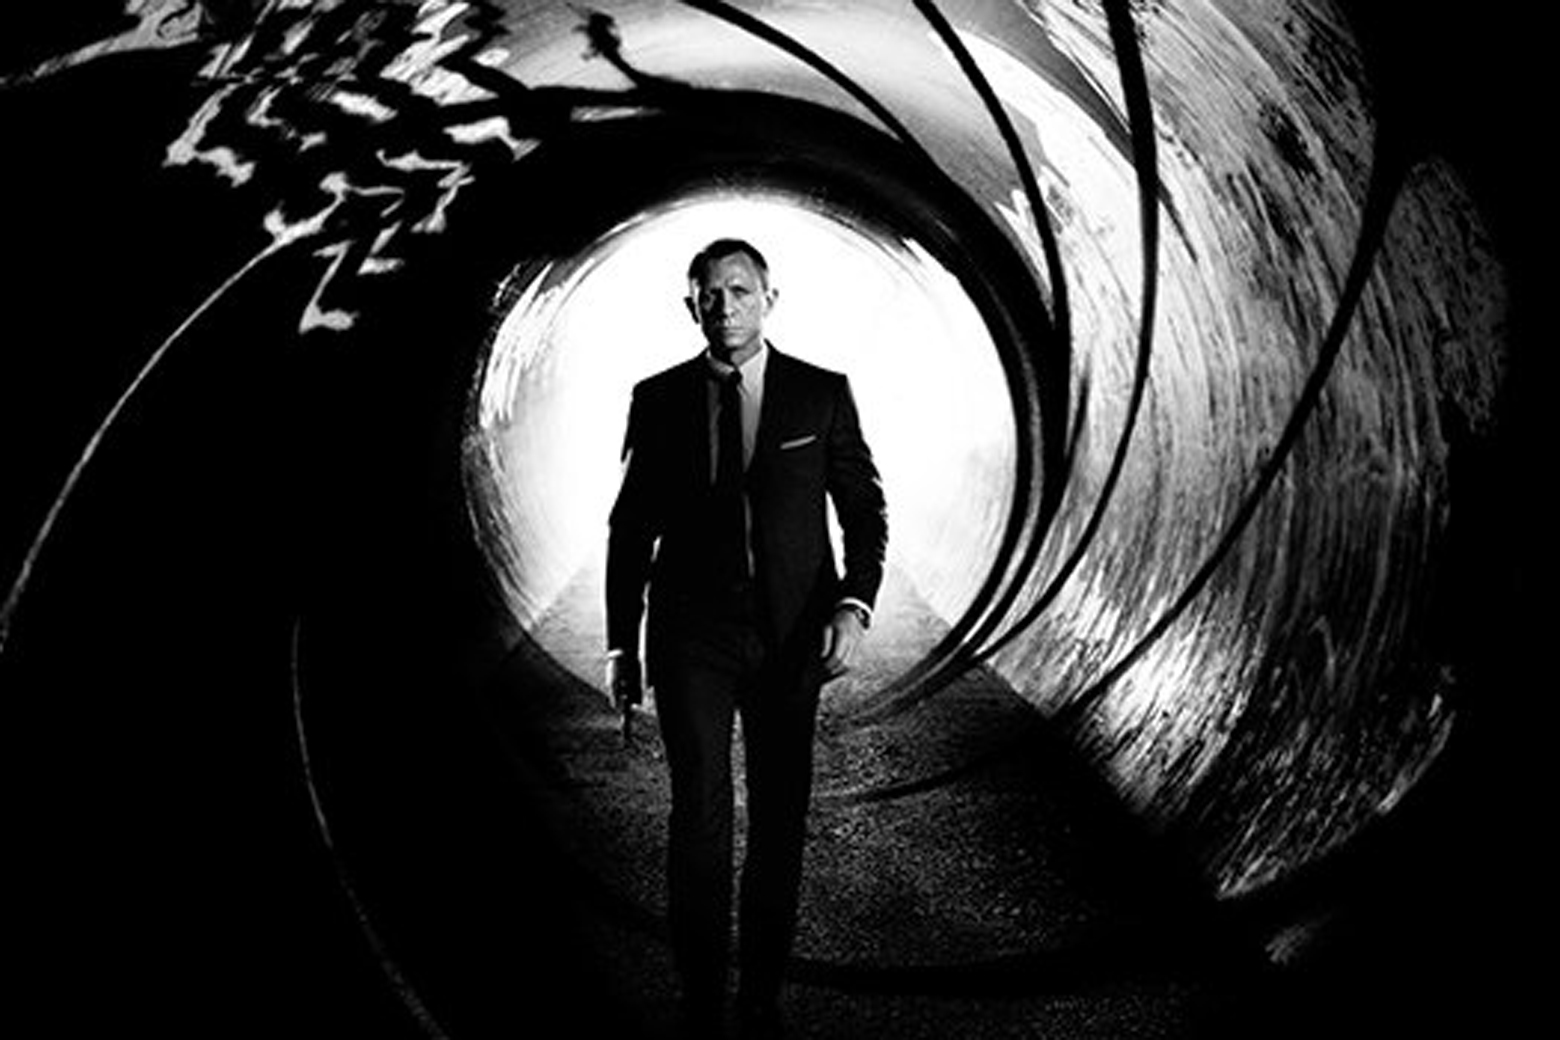 007 spectre full movie dailymotion